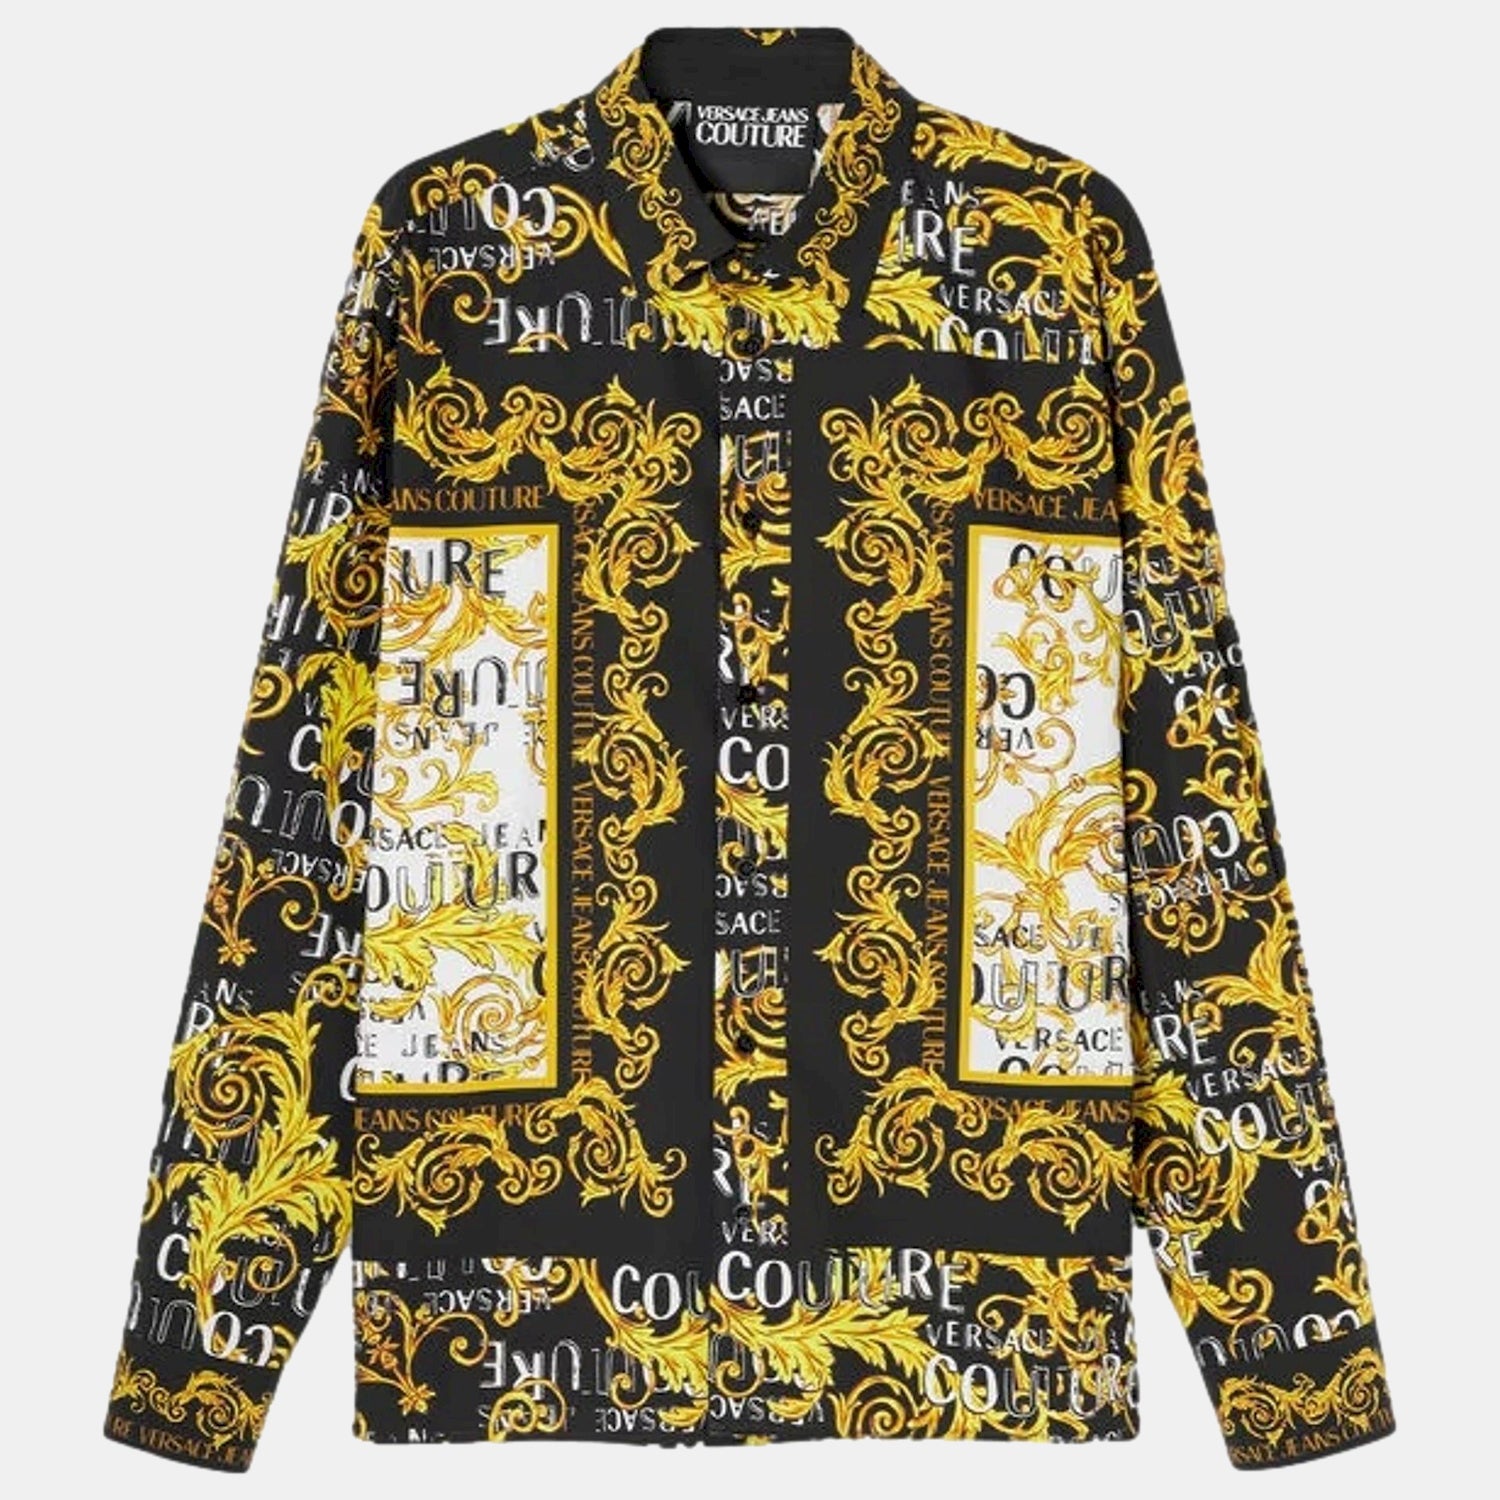 Versace Camisa  Shirt 74gal2rb Blk Gold Preto Ouro_shot3